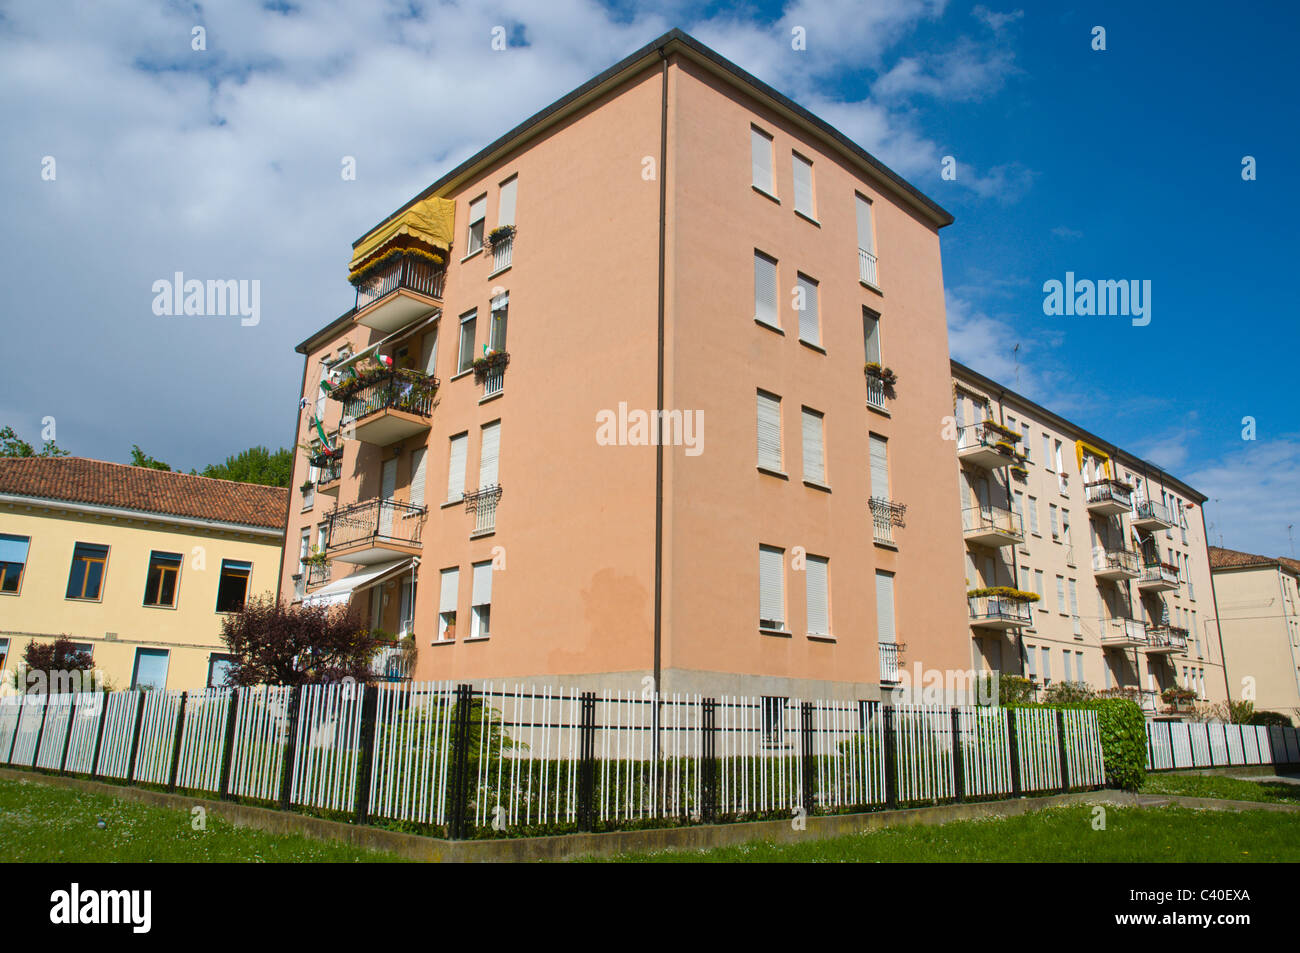 Residential housing blocks Castello district Venice Italy Europe Stock Photo